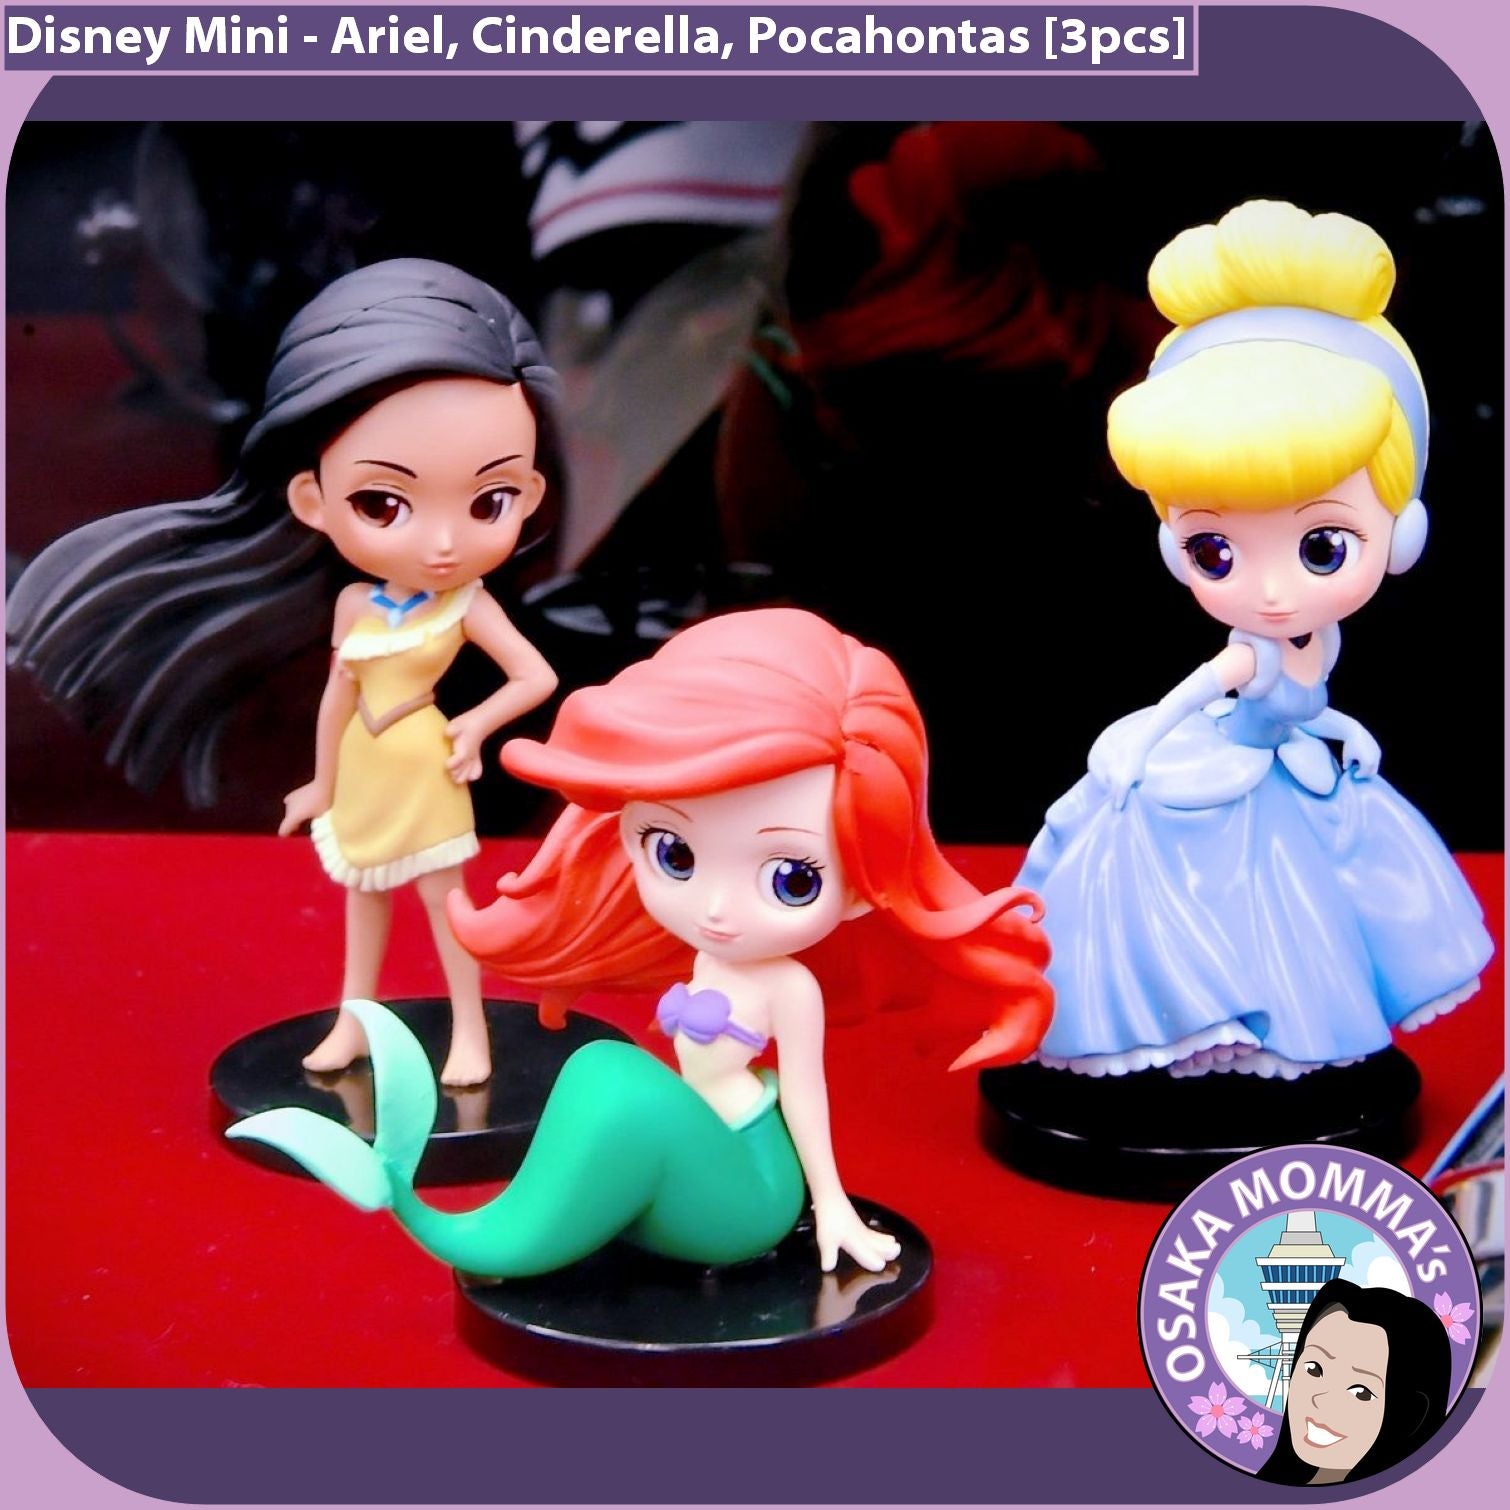 Disney Qposket Petit Vol. 2 Ariel・ Cinderella・ Pocahontas